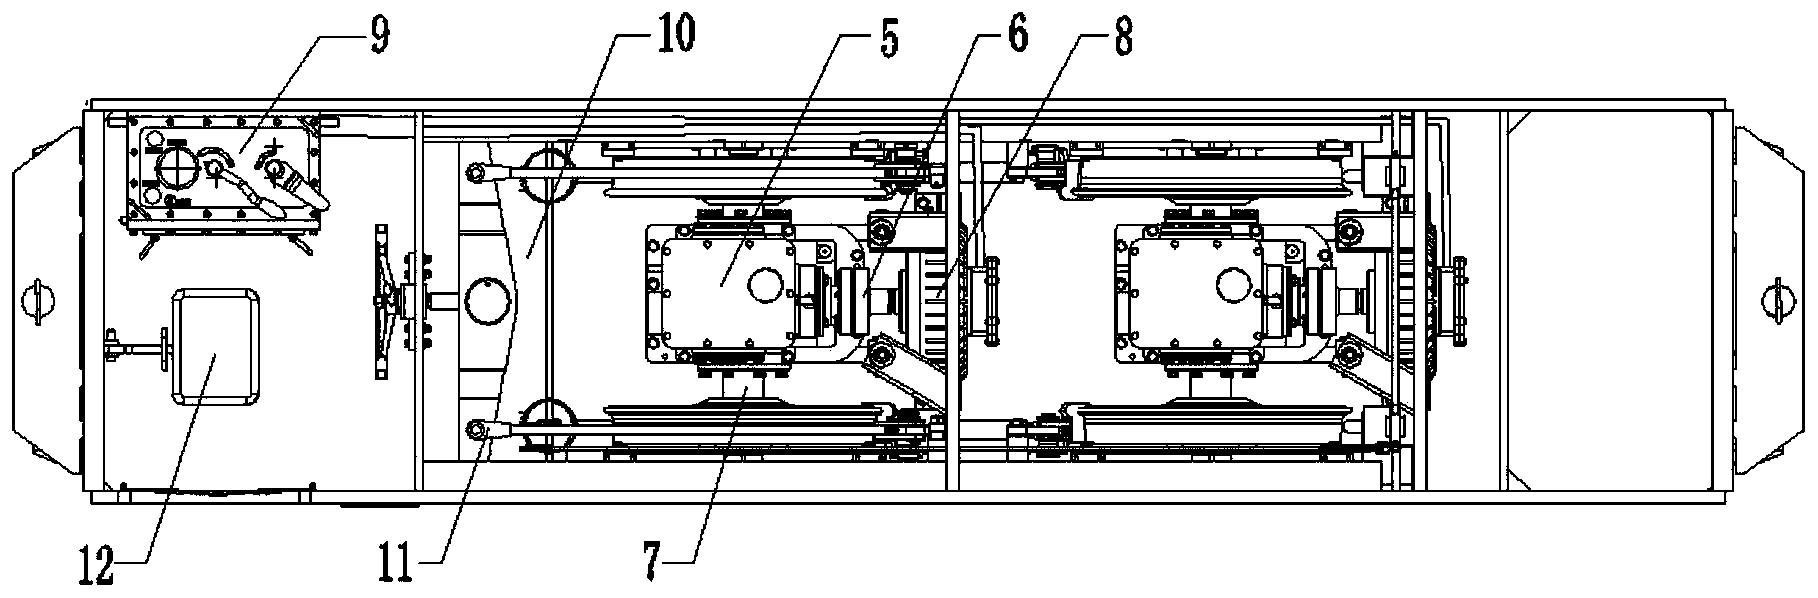 Accumulator disc type electric locomotive